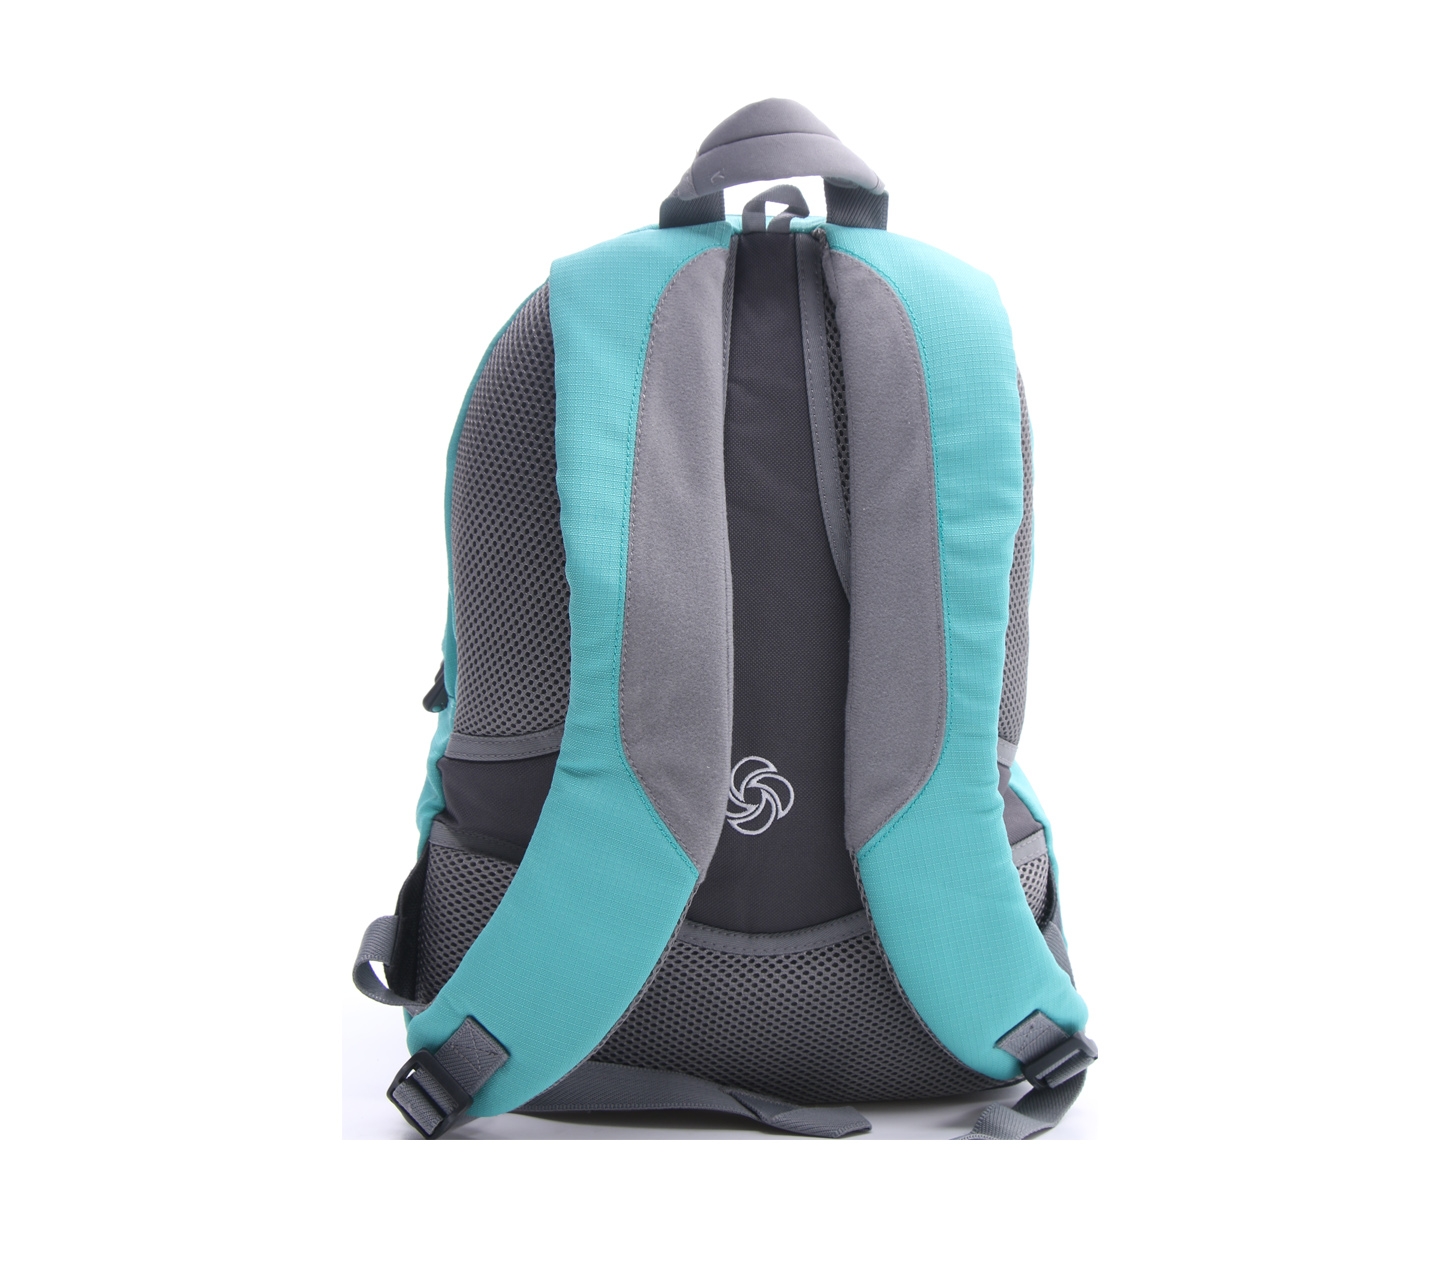 Samsonite Blue Backpack